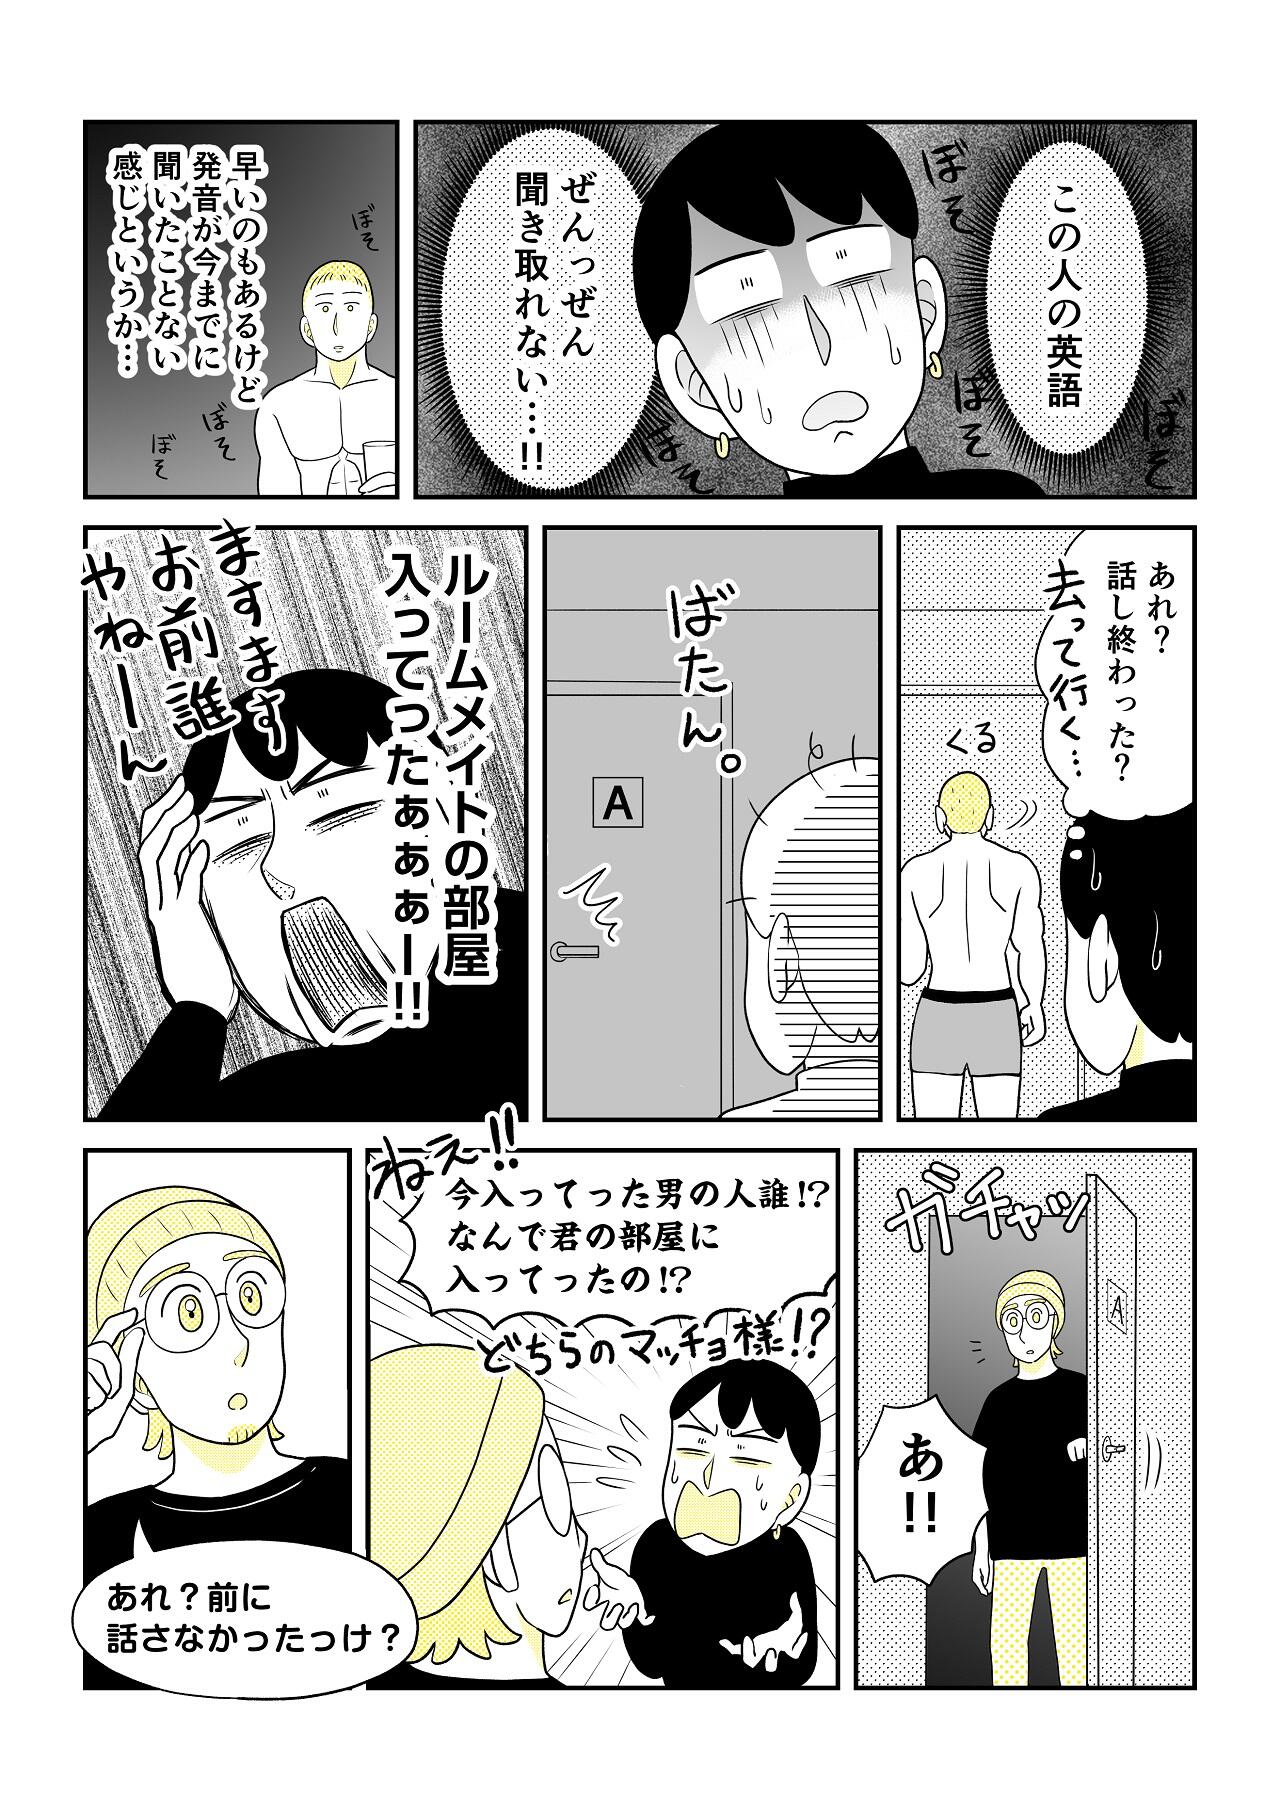 https://www.ryugaku.co.jp/column/images/24_04_1280.jpg